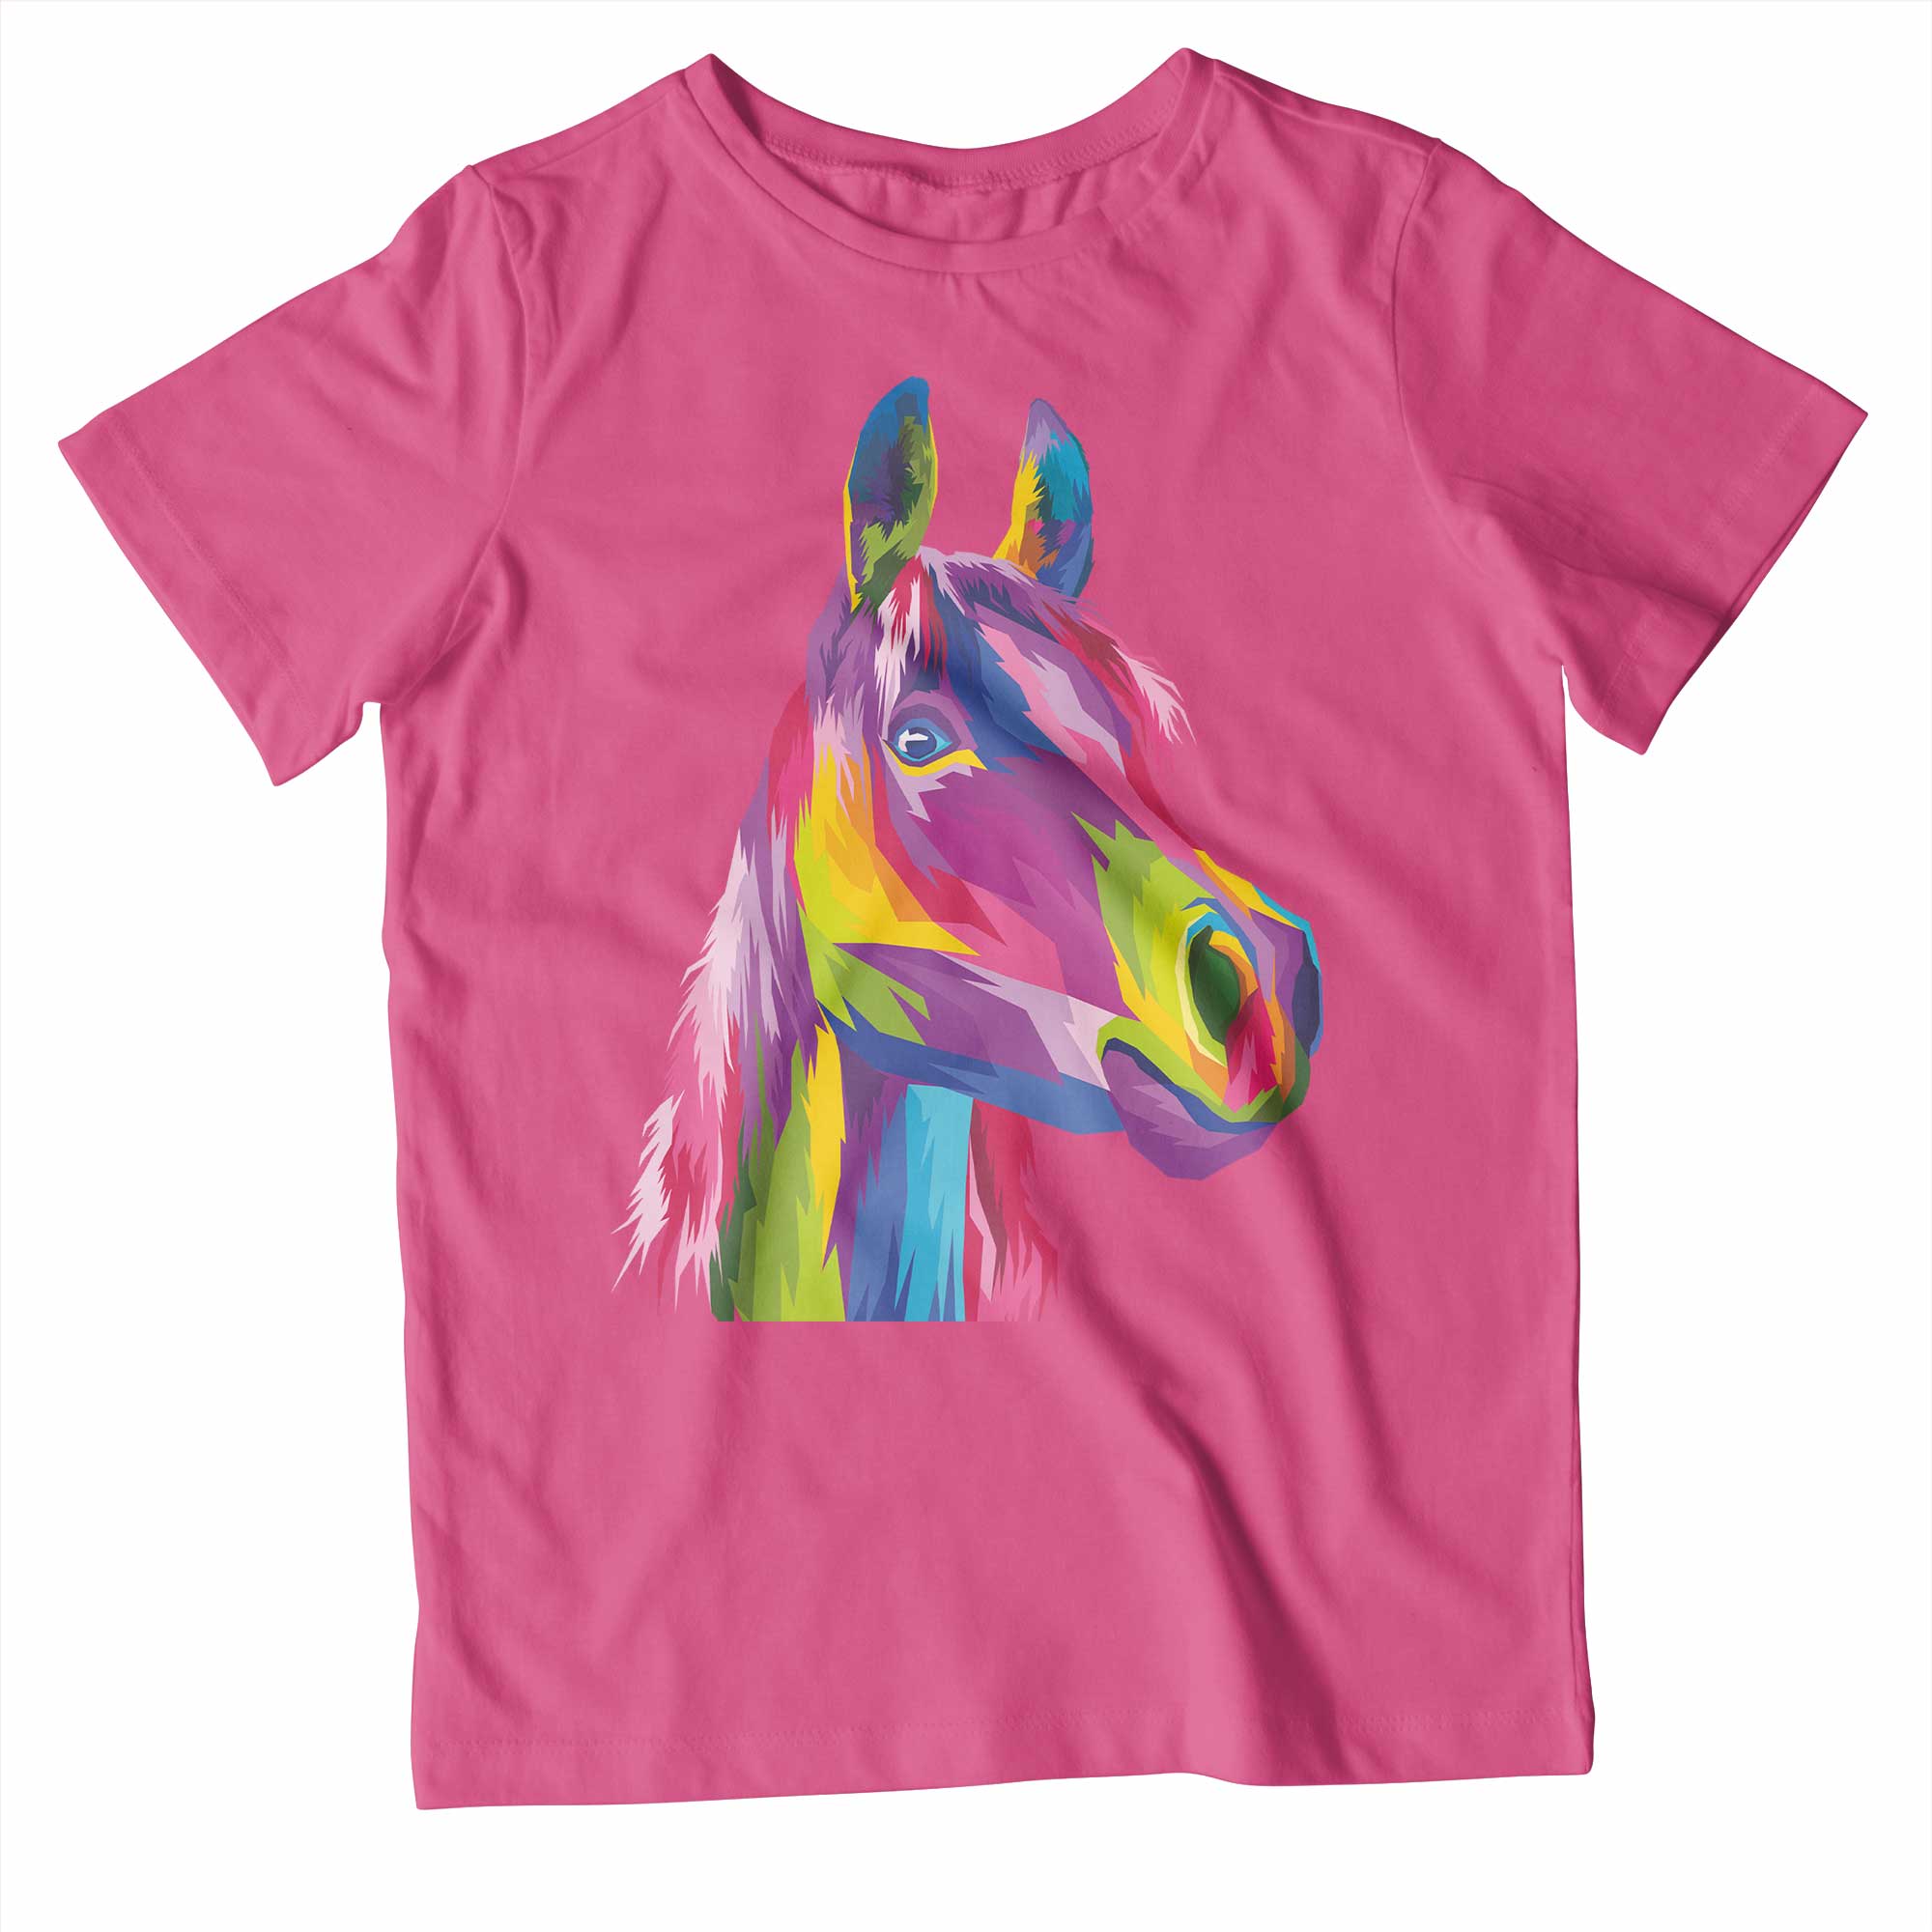 Kids Colourful Horse T-Shirt